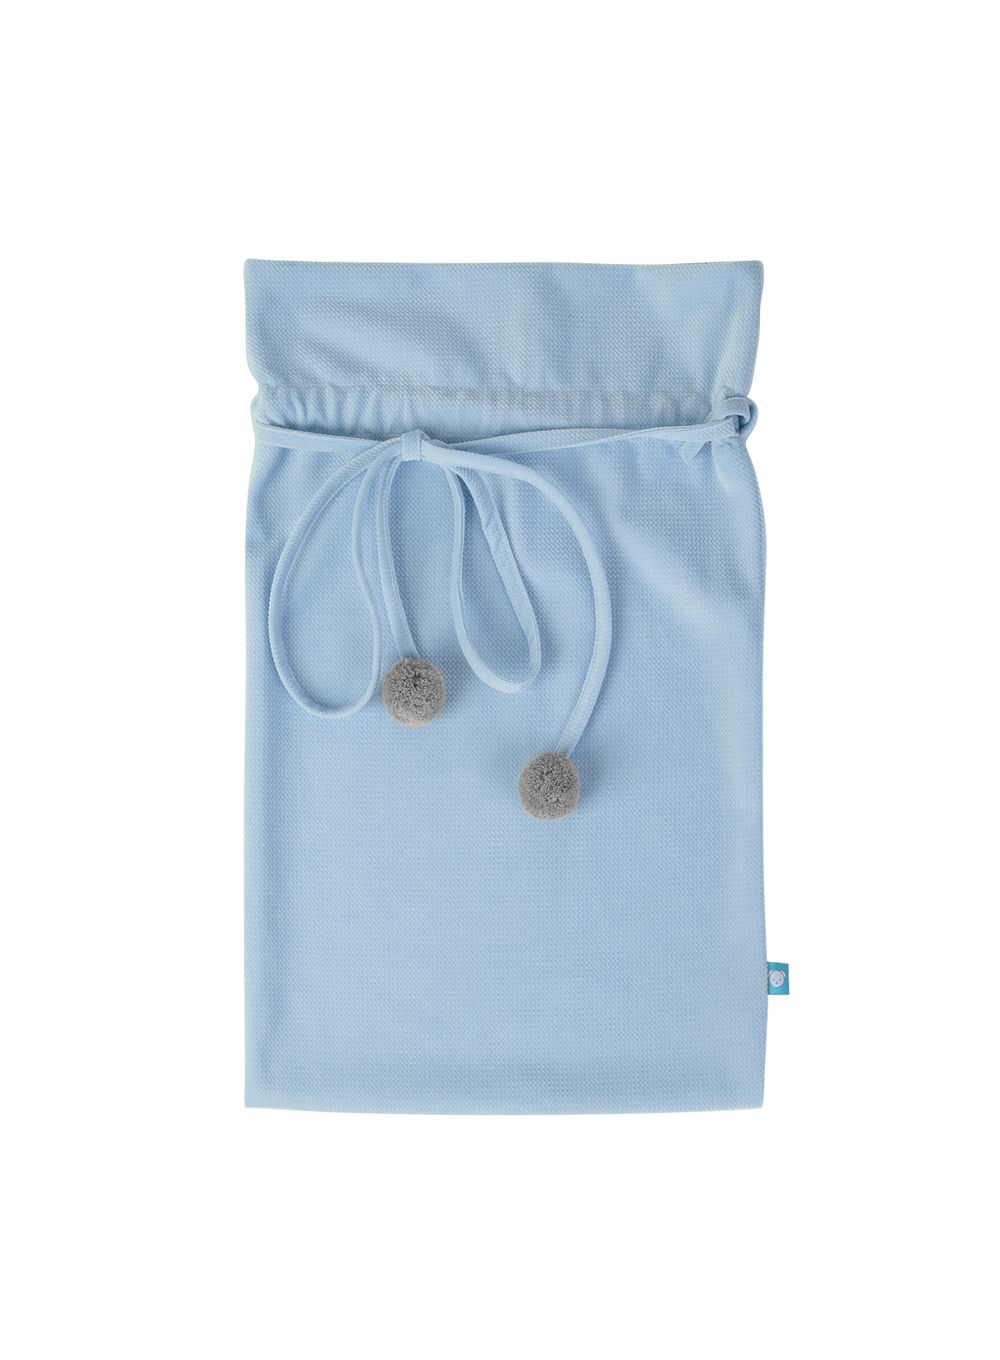 Gift bag - big blue